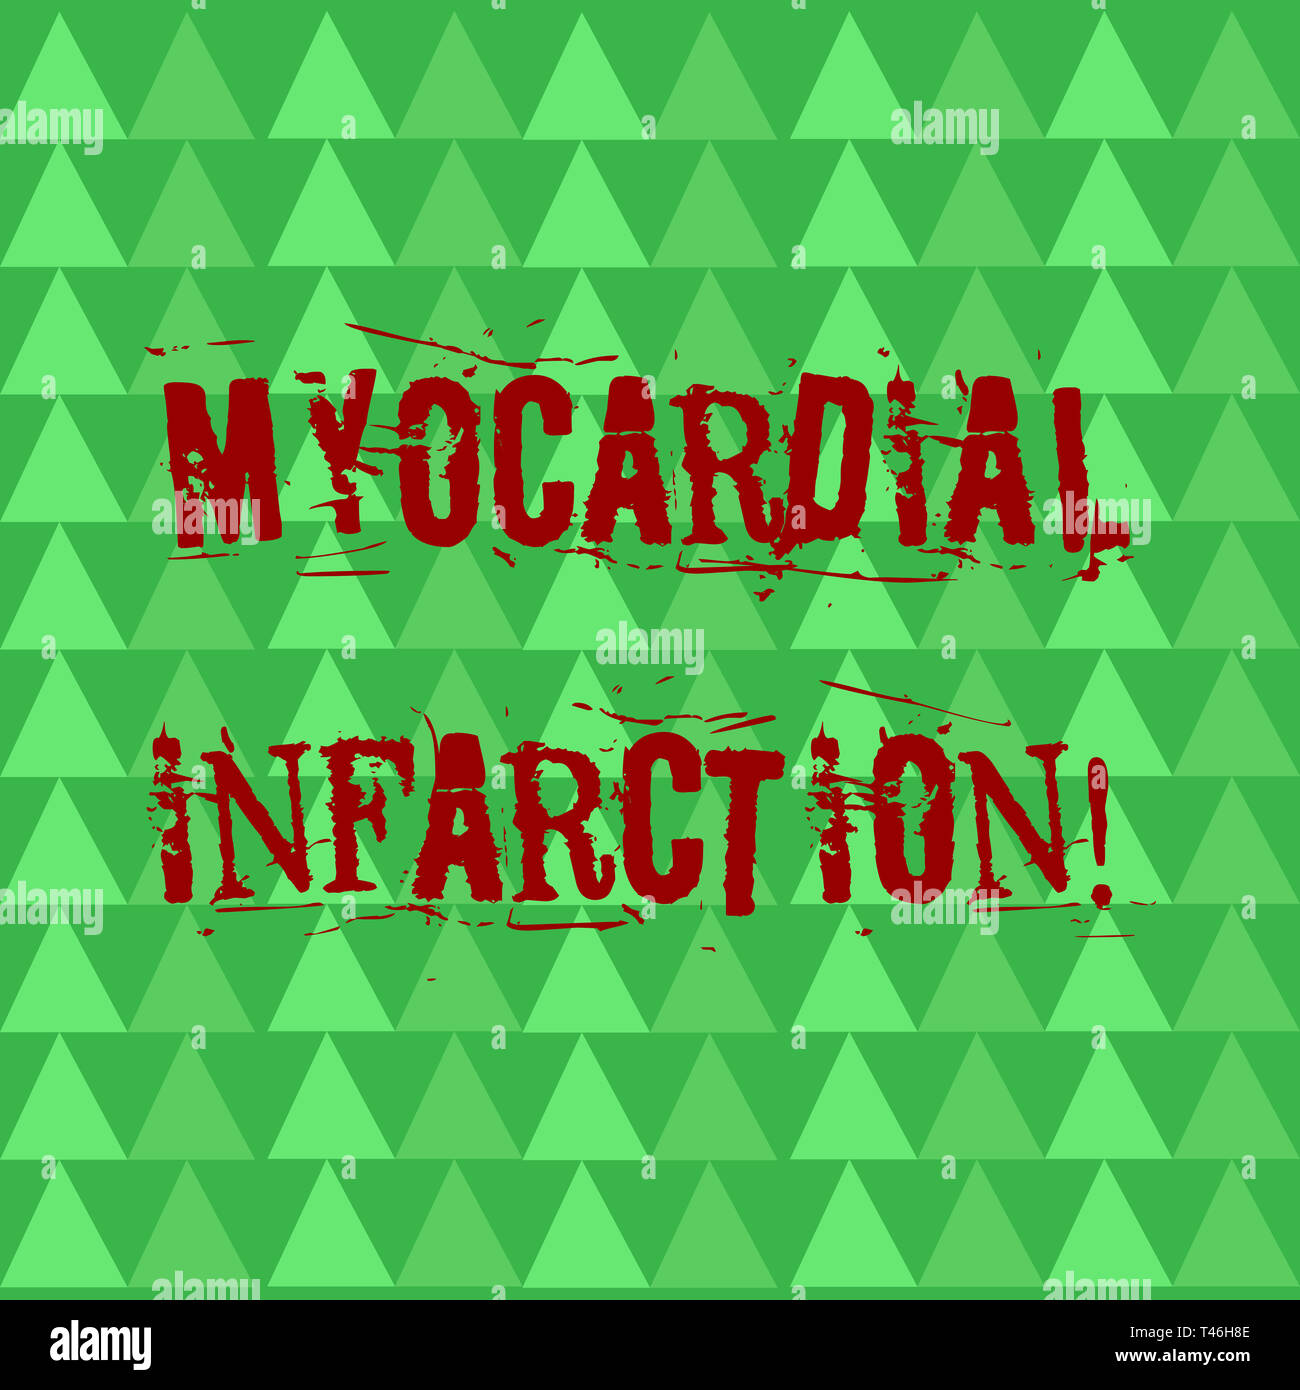 Meaning infarction Infarction